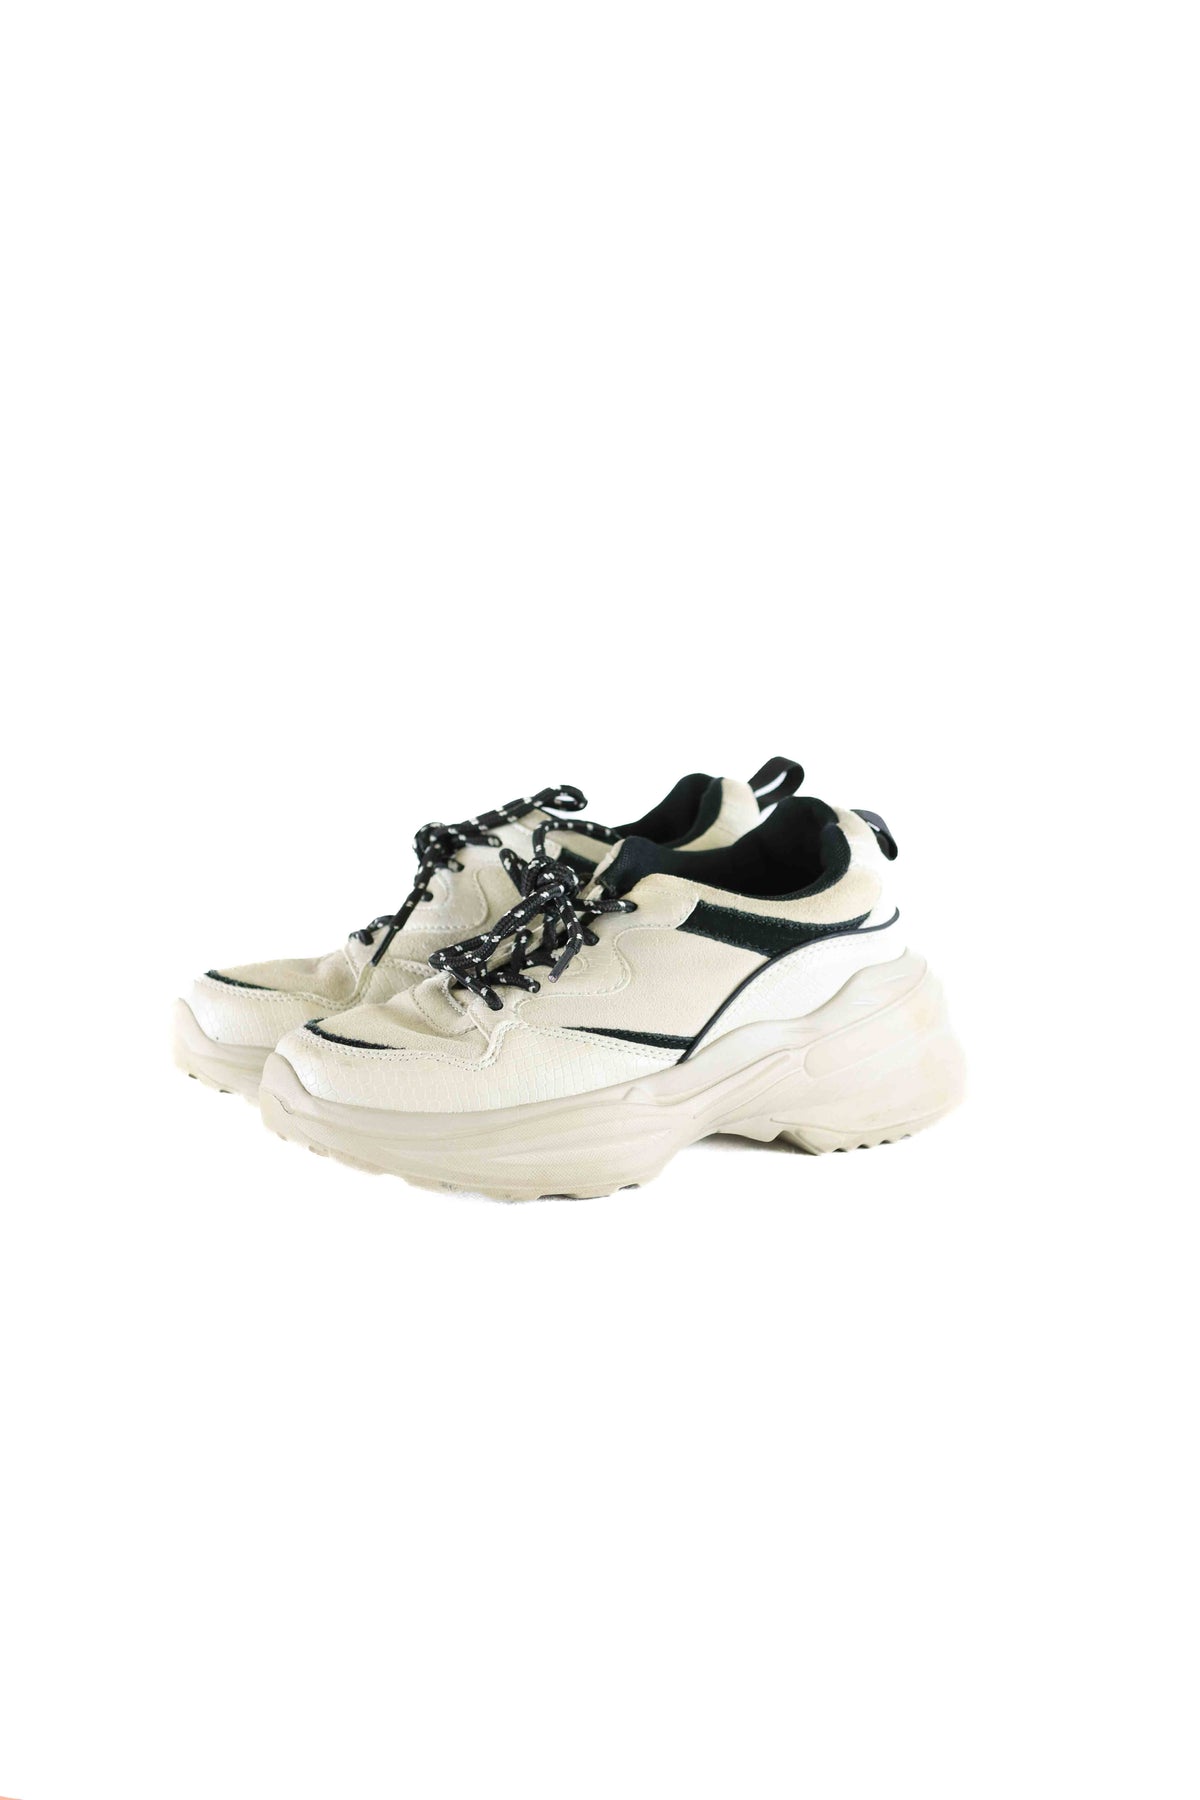 Wittner Cream and Black Sneakers AU/US 4.5 (EU 35)